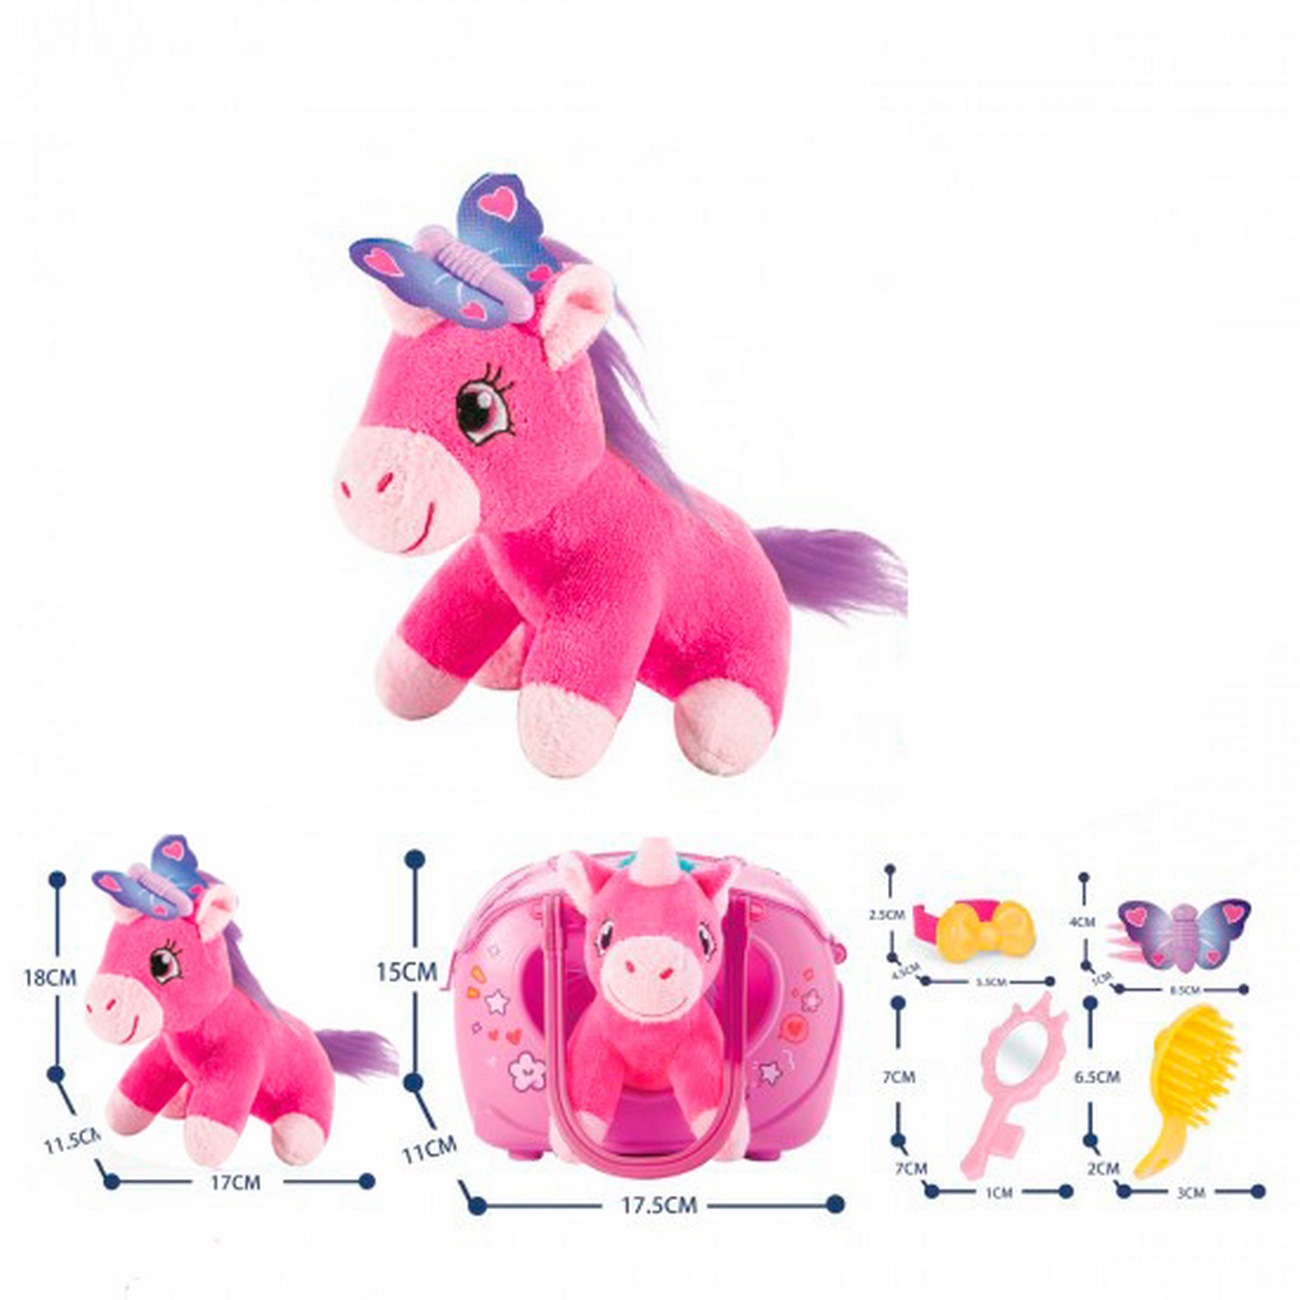 Maleta Bolso Juguete Mascota Unicornio Pony + Accesorios